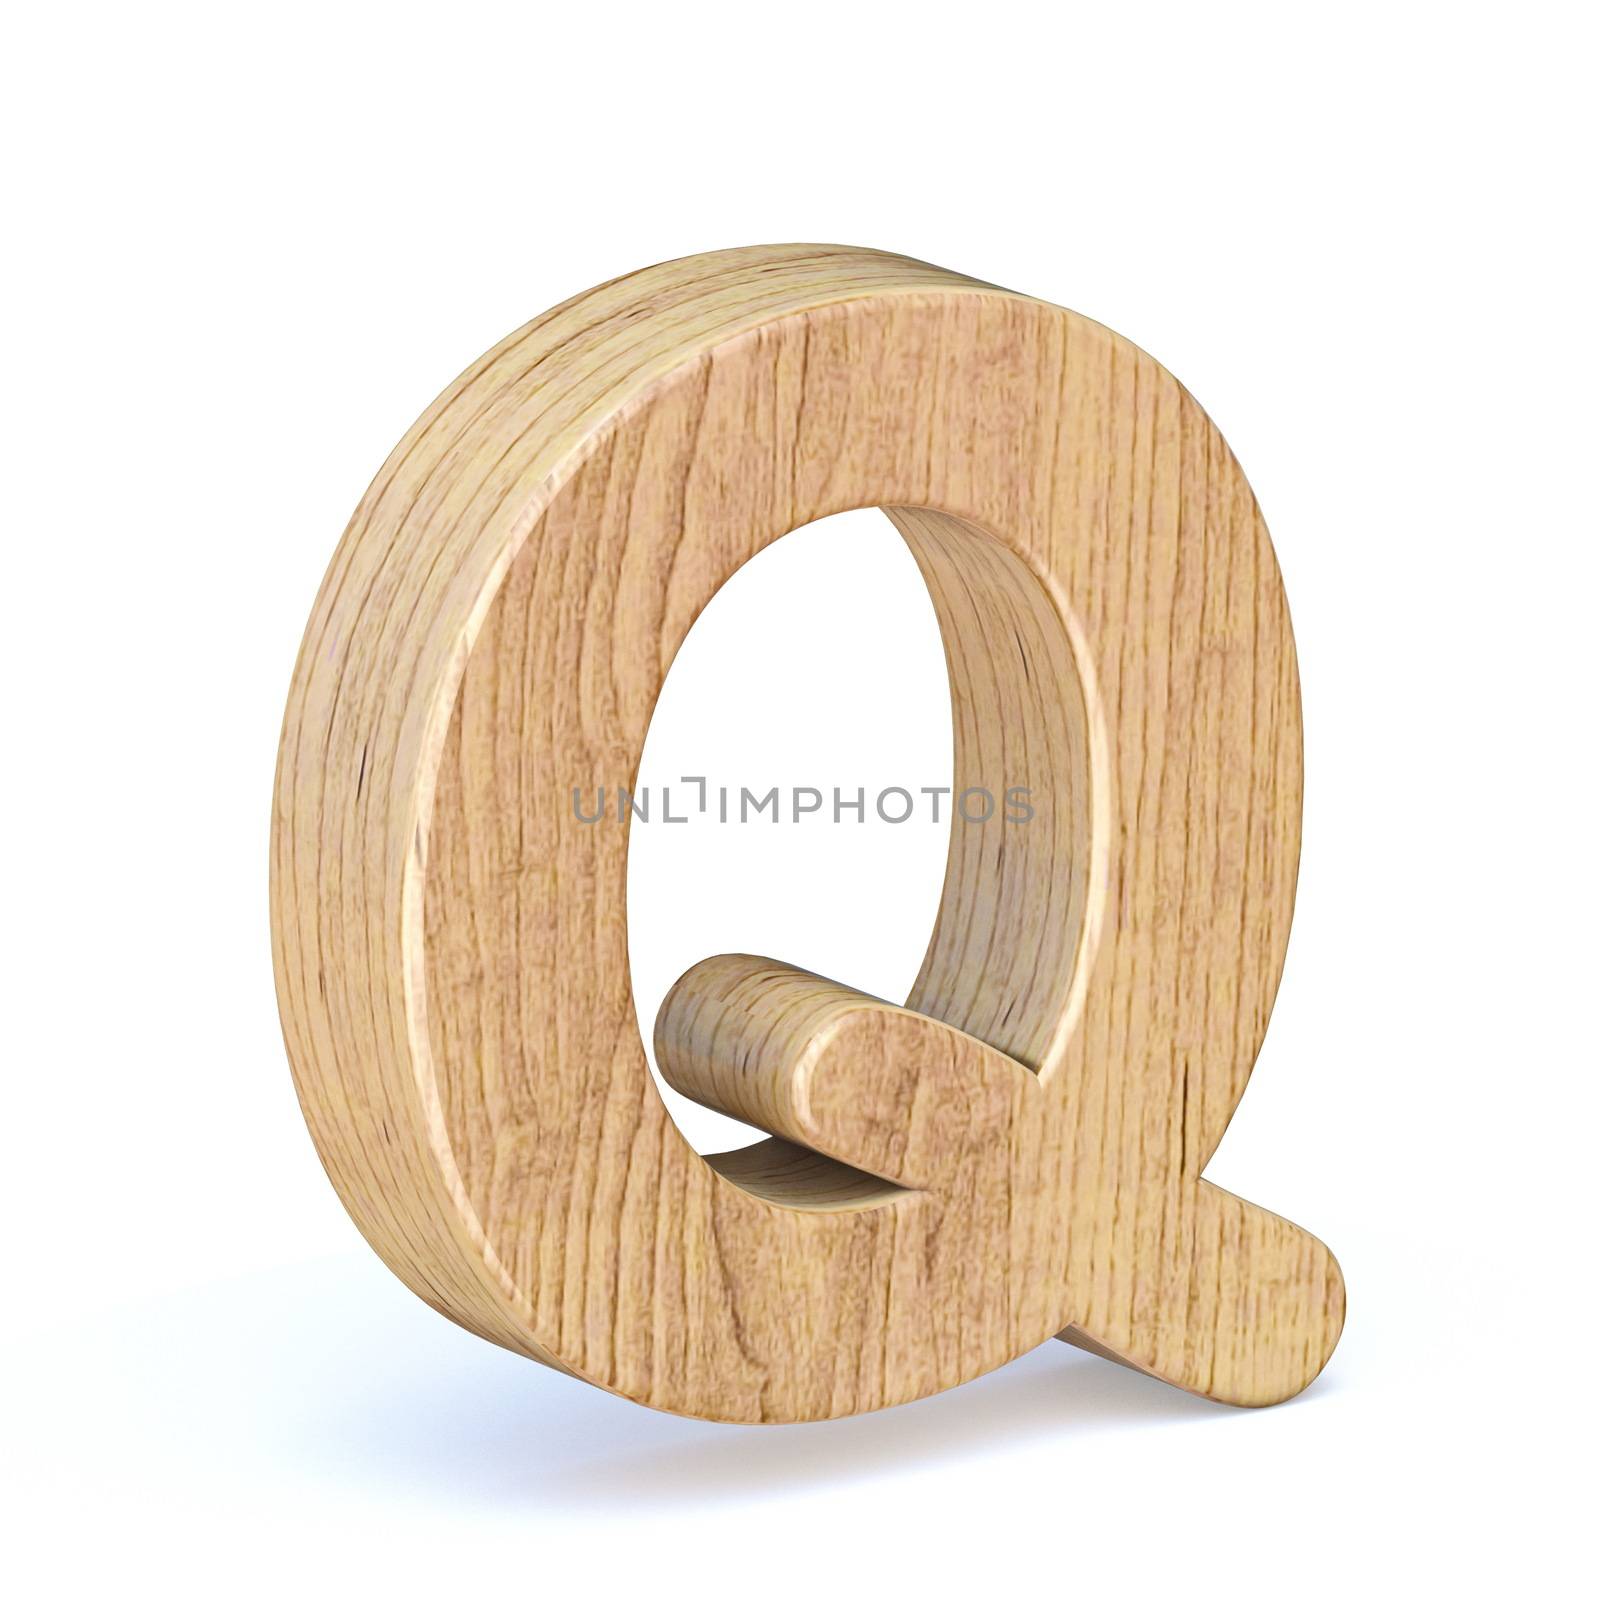 Rounded wooden font Letter Q 3D render illustration isolated on white background